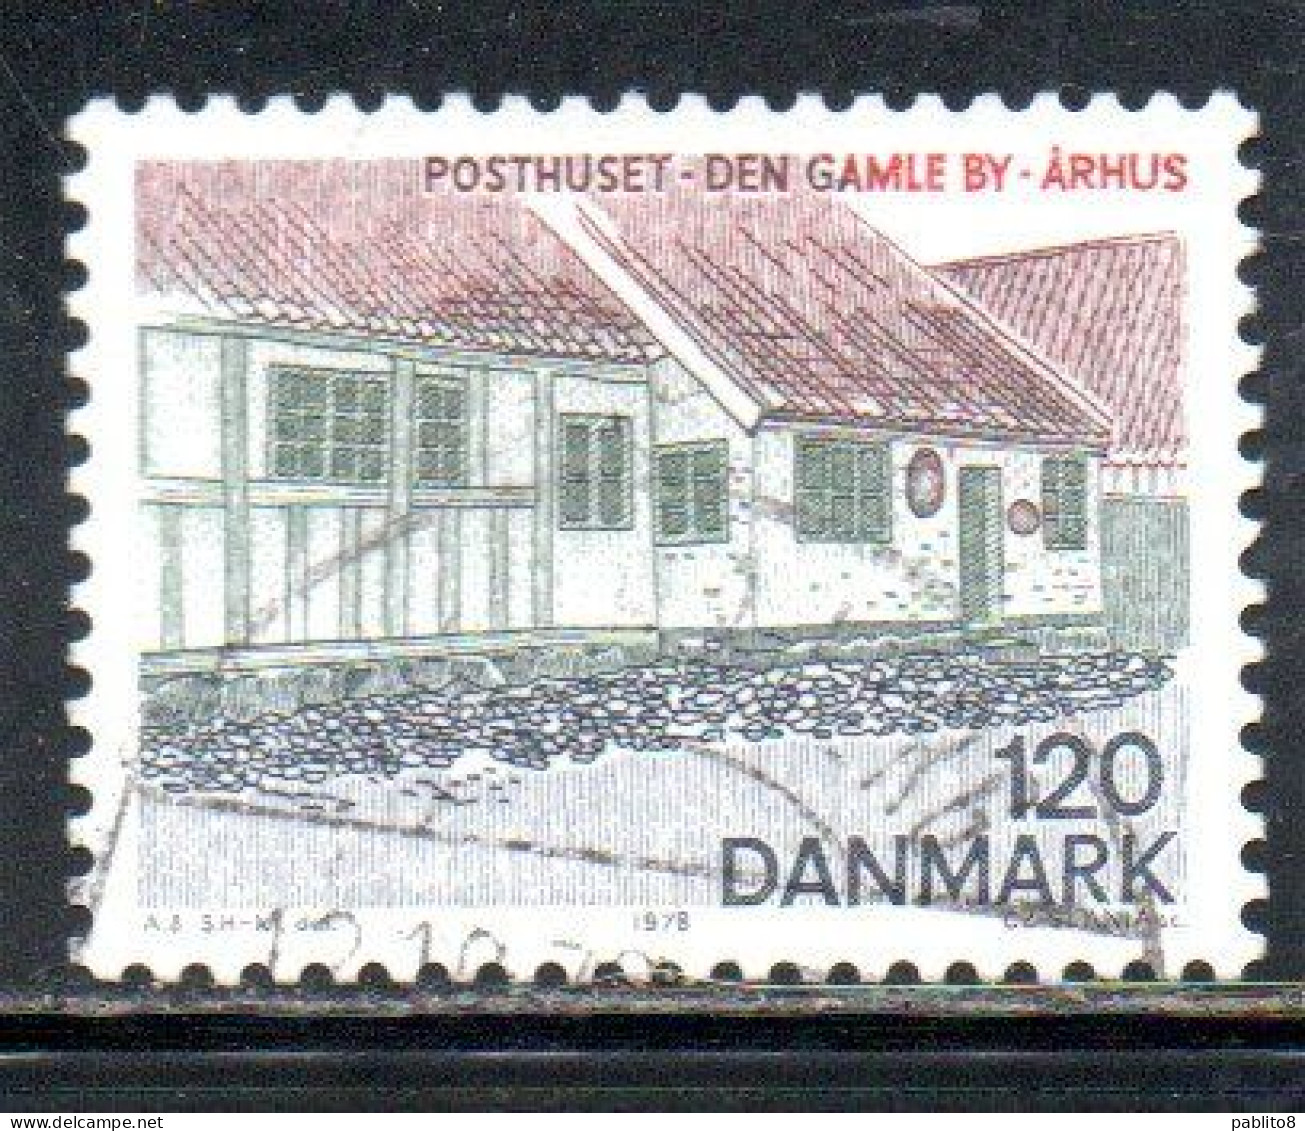 DANEMARK DANMARK DENMARK DANIMARCA 1978 LANDSCAPES CENTRAL JUTLAND POST OFFICE OLD TOWN AARTHUS 120o USED USATO OBLITERE - Gebraucht